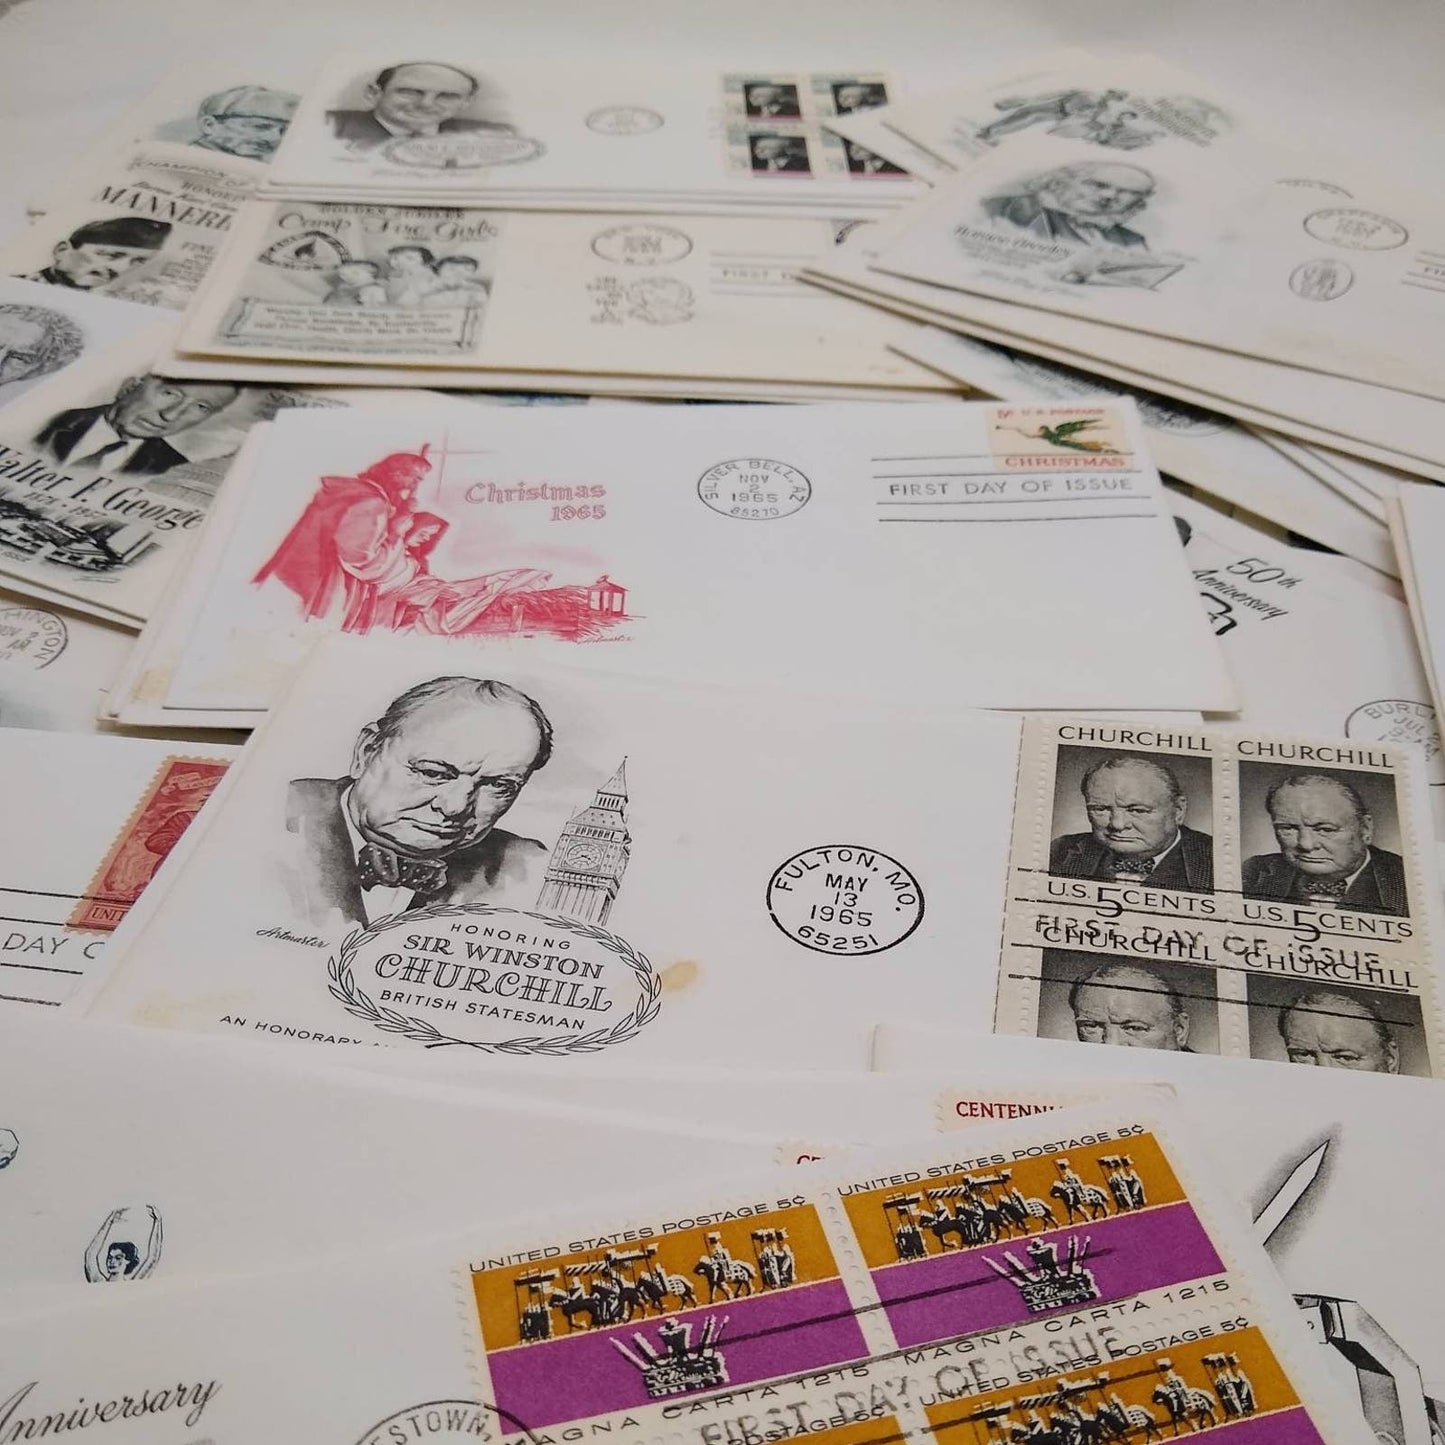 25 First Day of Issue Envelopes, Vintage Envelopes,  1960s Envelopes